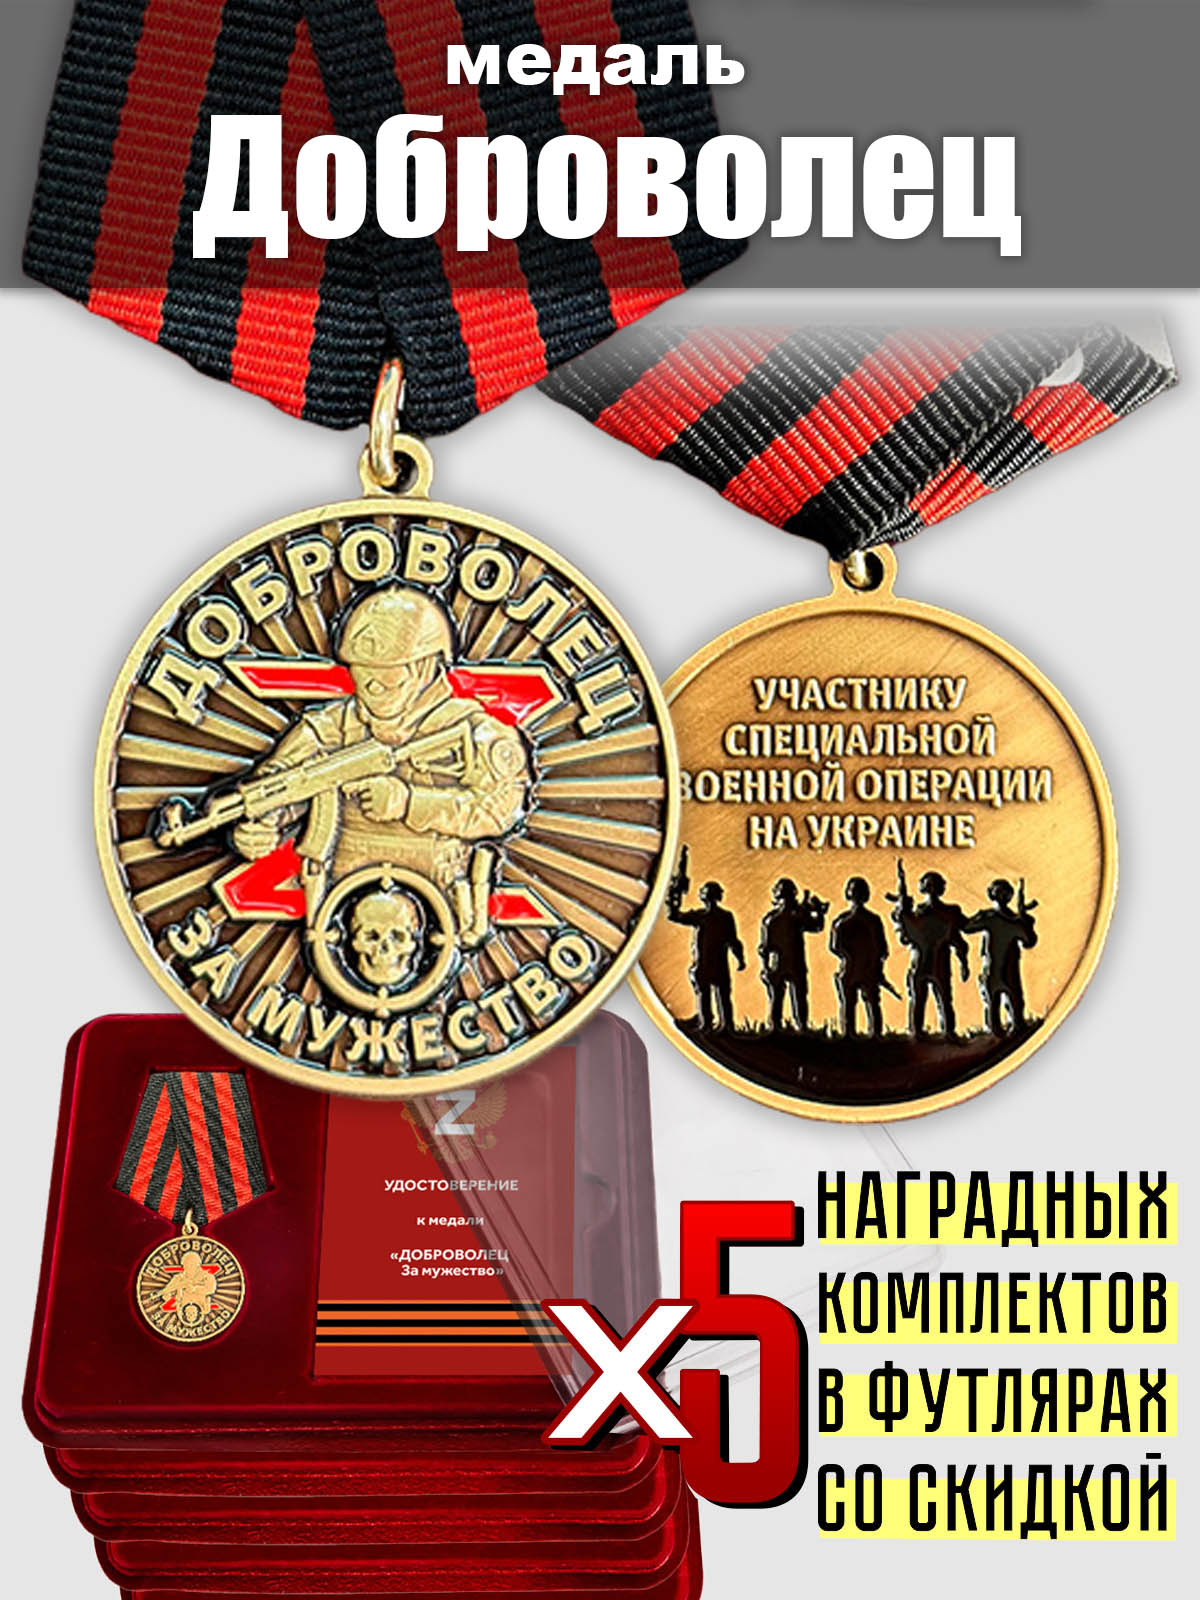 Набор медалей "За мужество" добровольцам СВО (5 шт.)